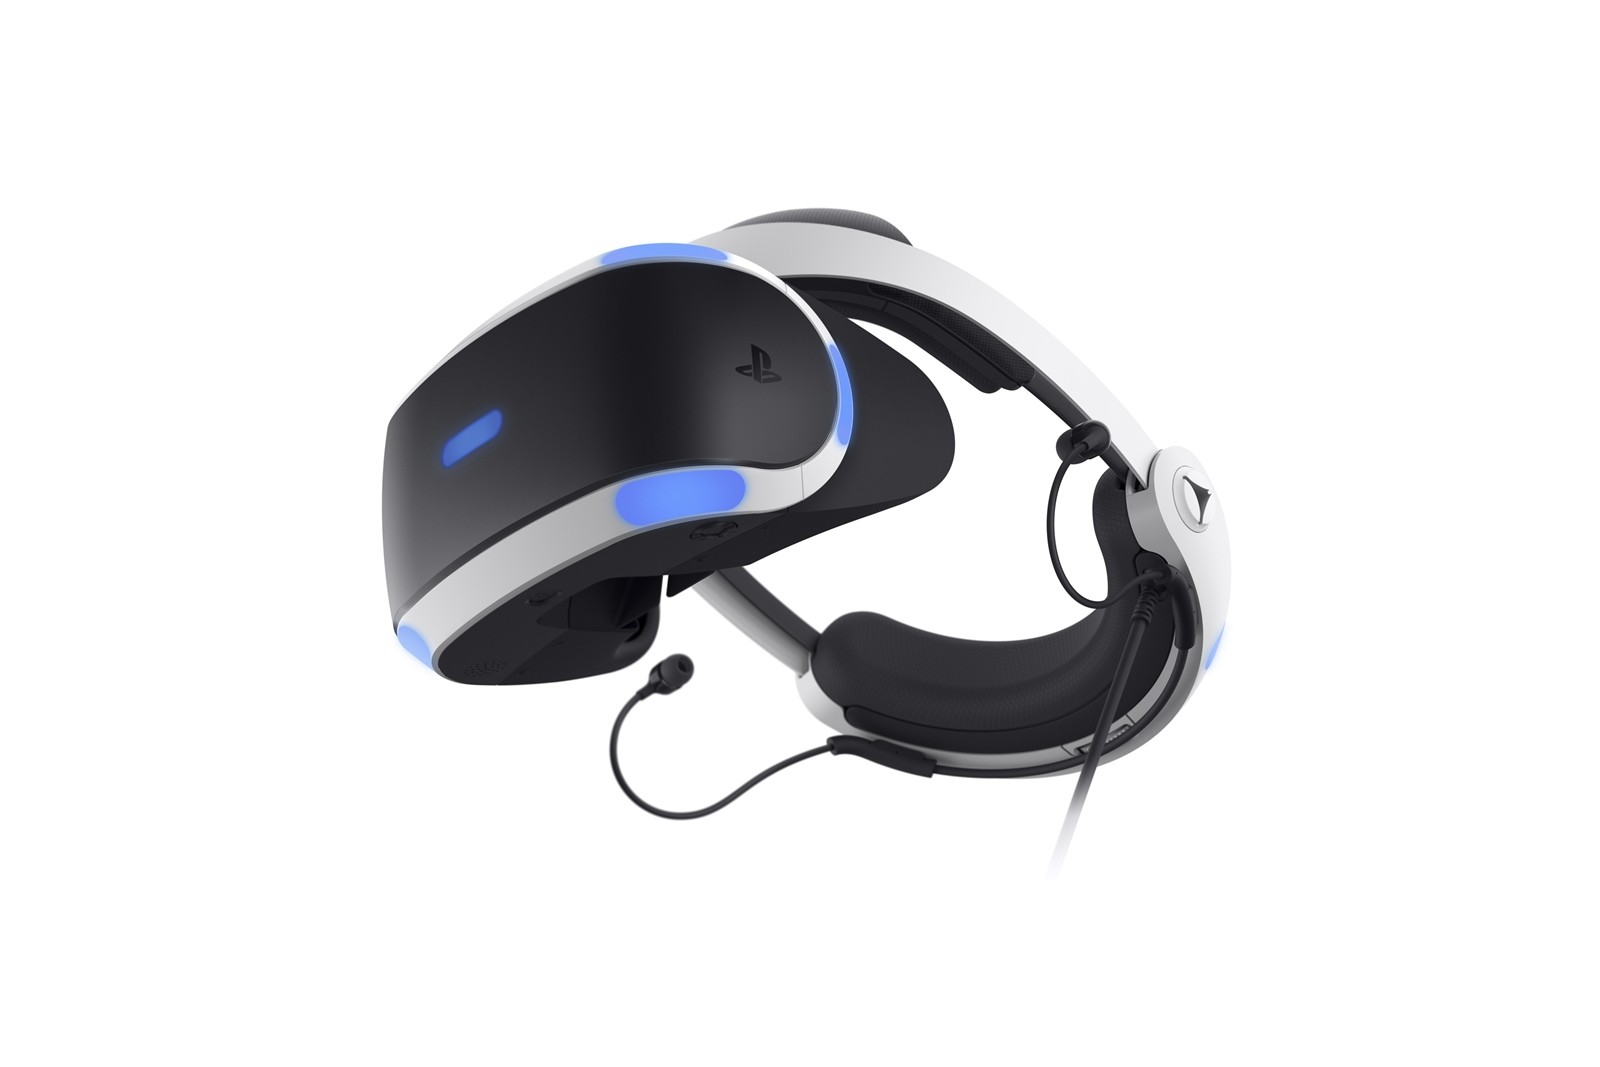 PS4 虛擬實境裝置 PlayStation VR 迎接上市 5 周年 將免費提供 PS+ 會員 2 款 PS VR 遊戲